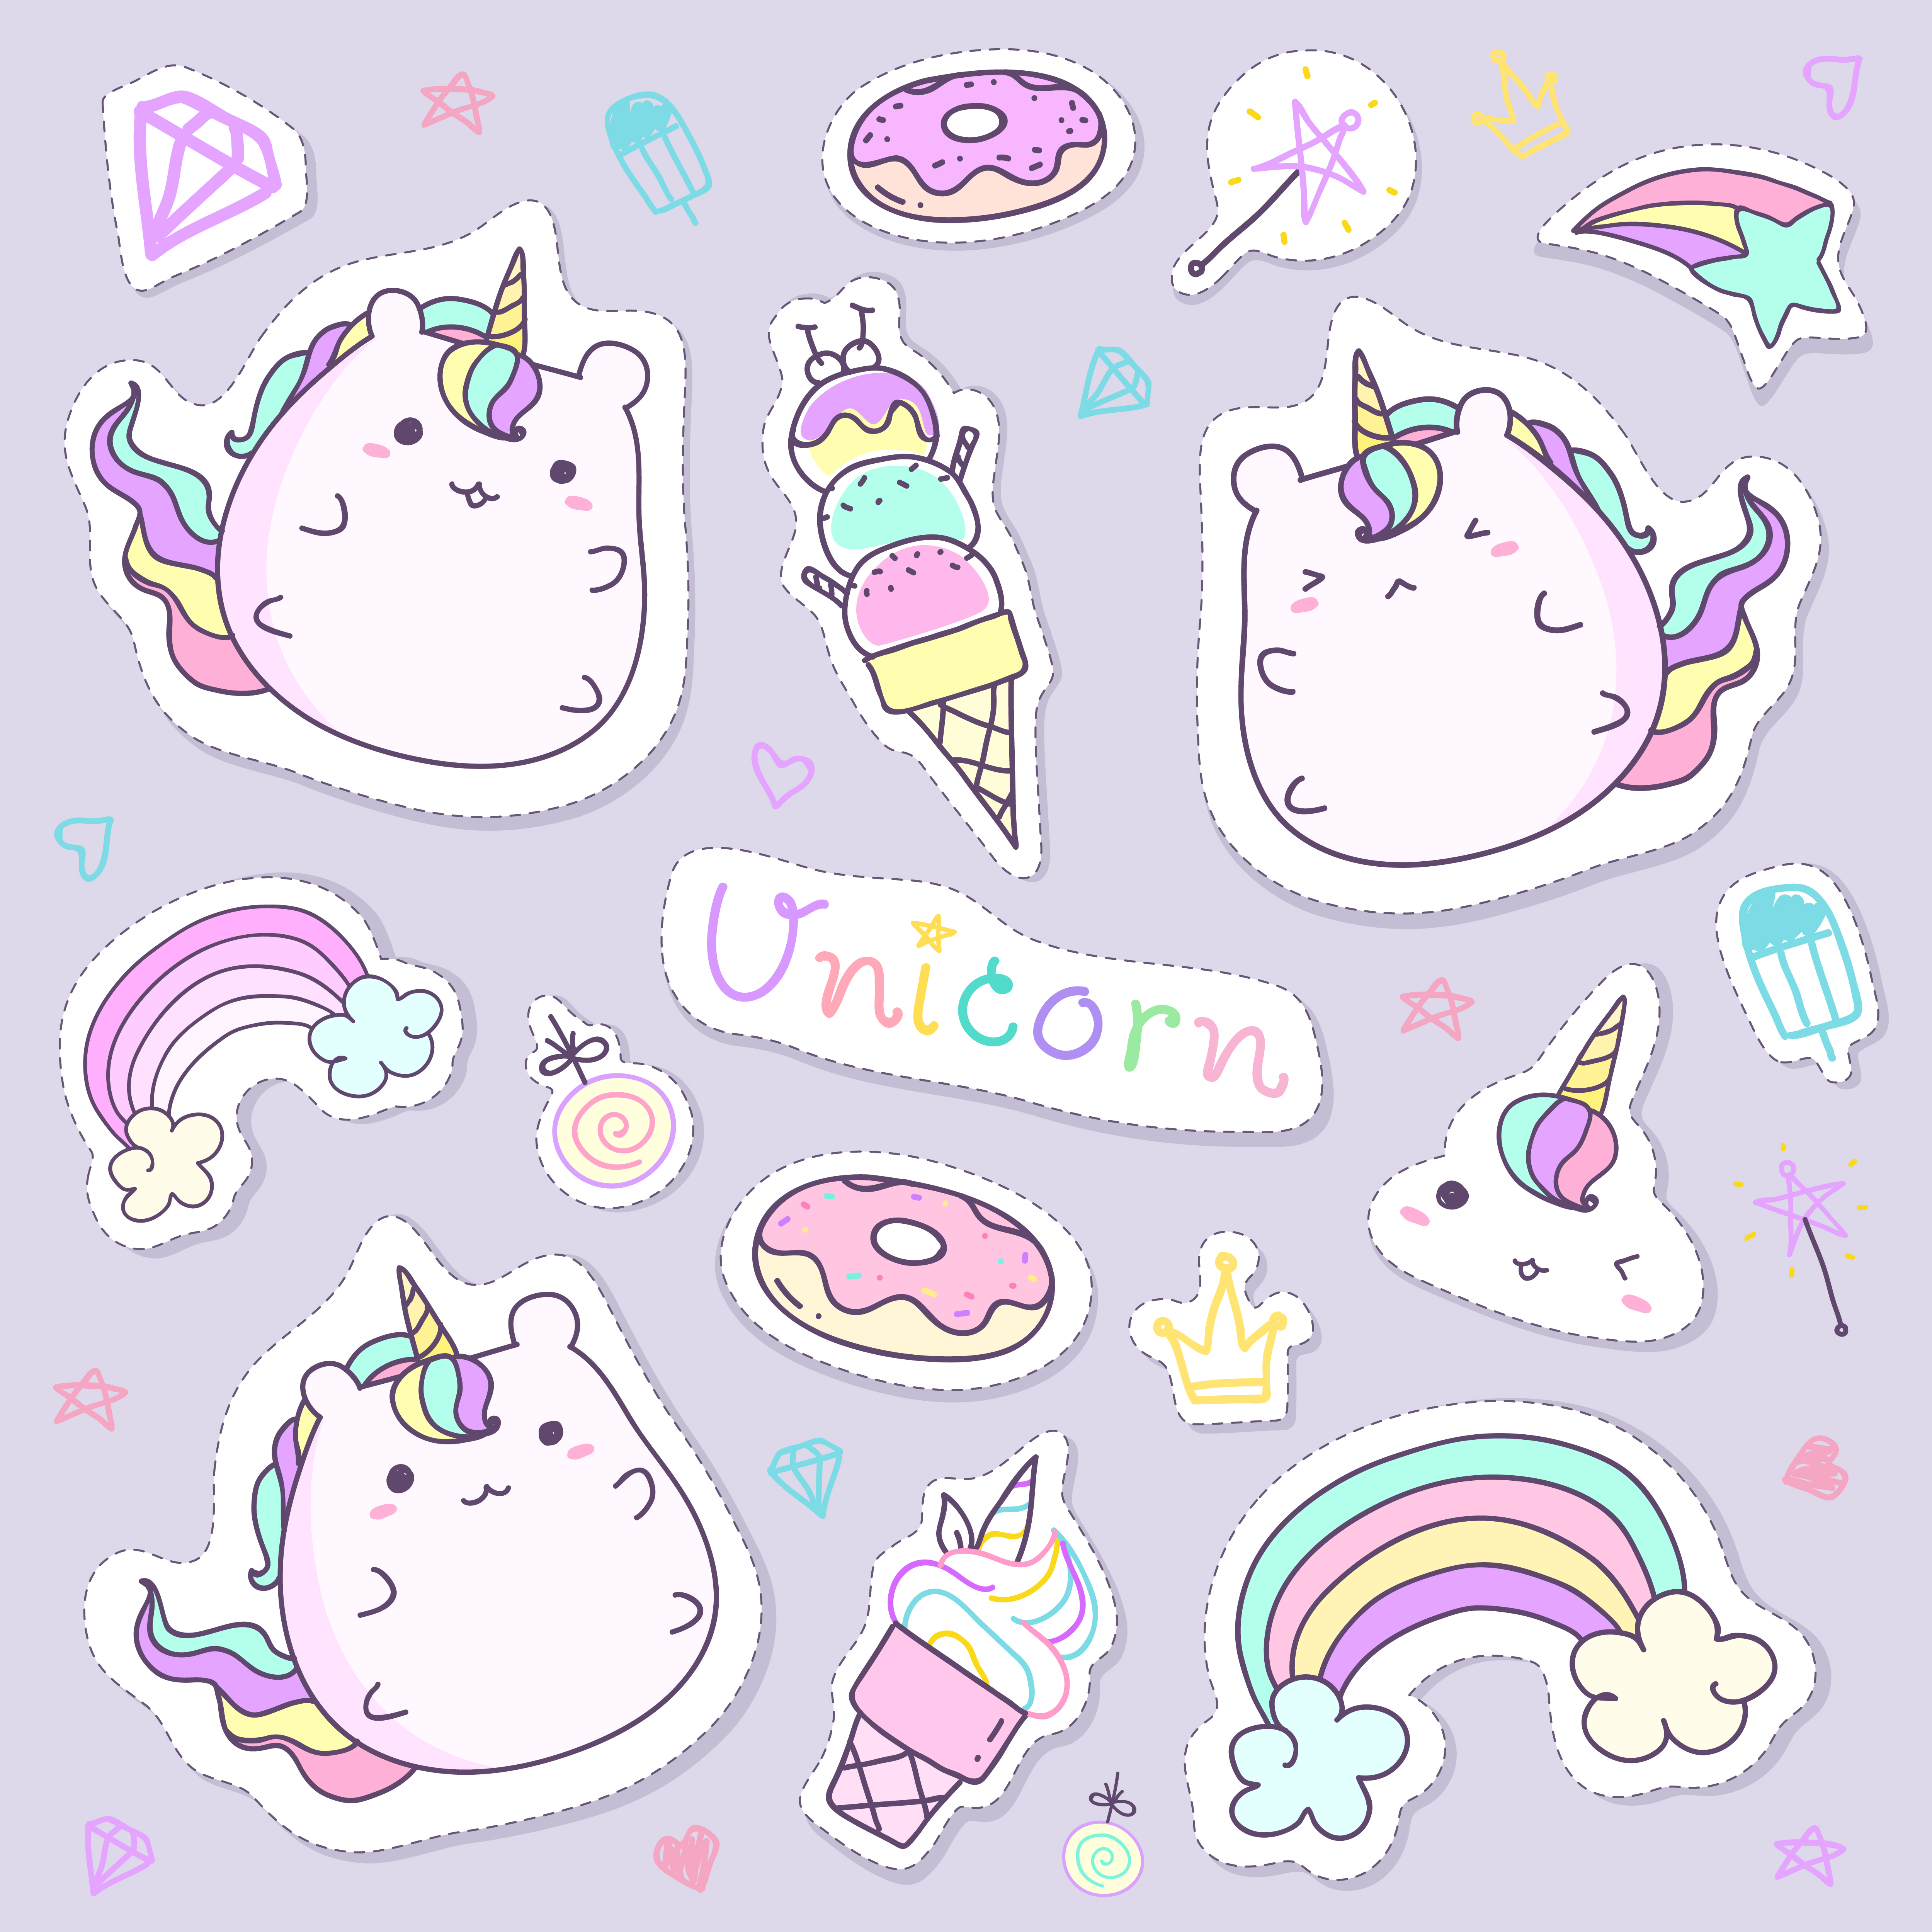 Kawaii unicorn sticker collection in pastel color. Cute doodle clip art